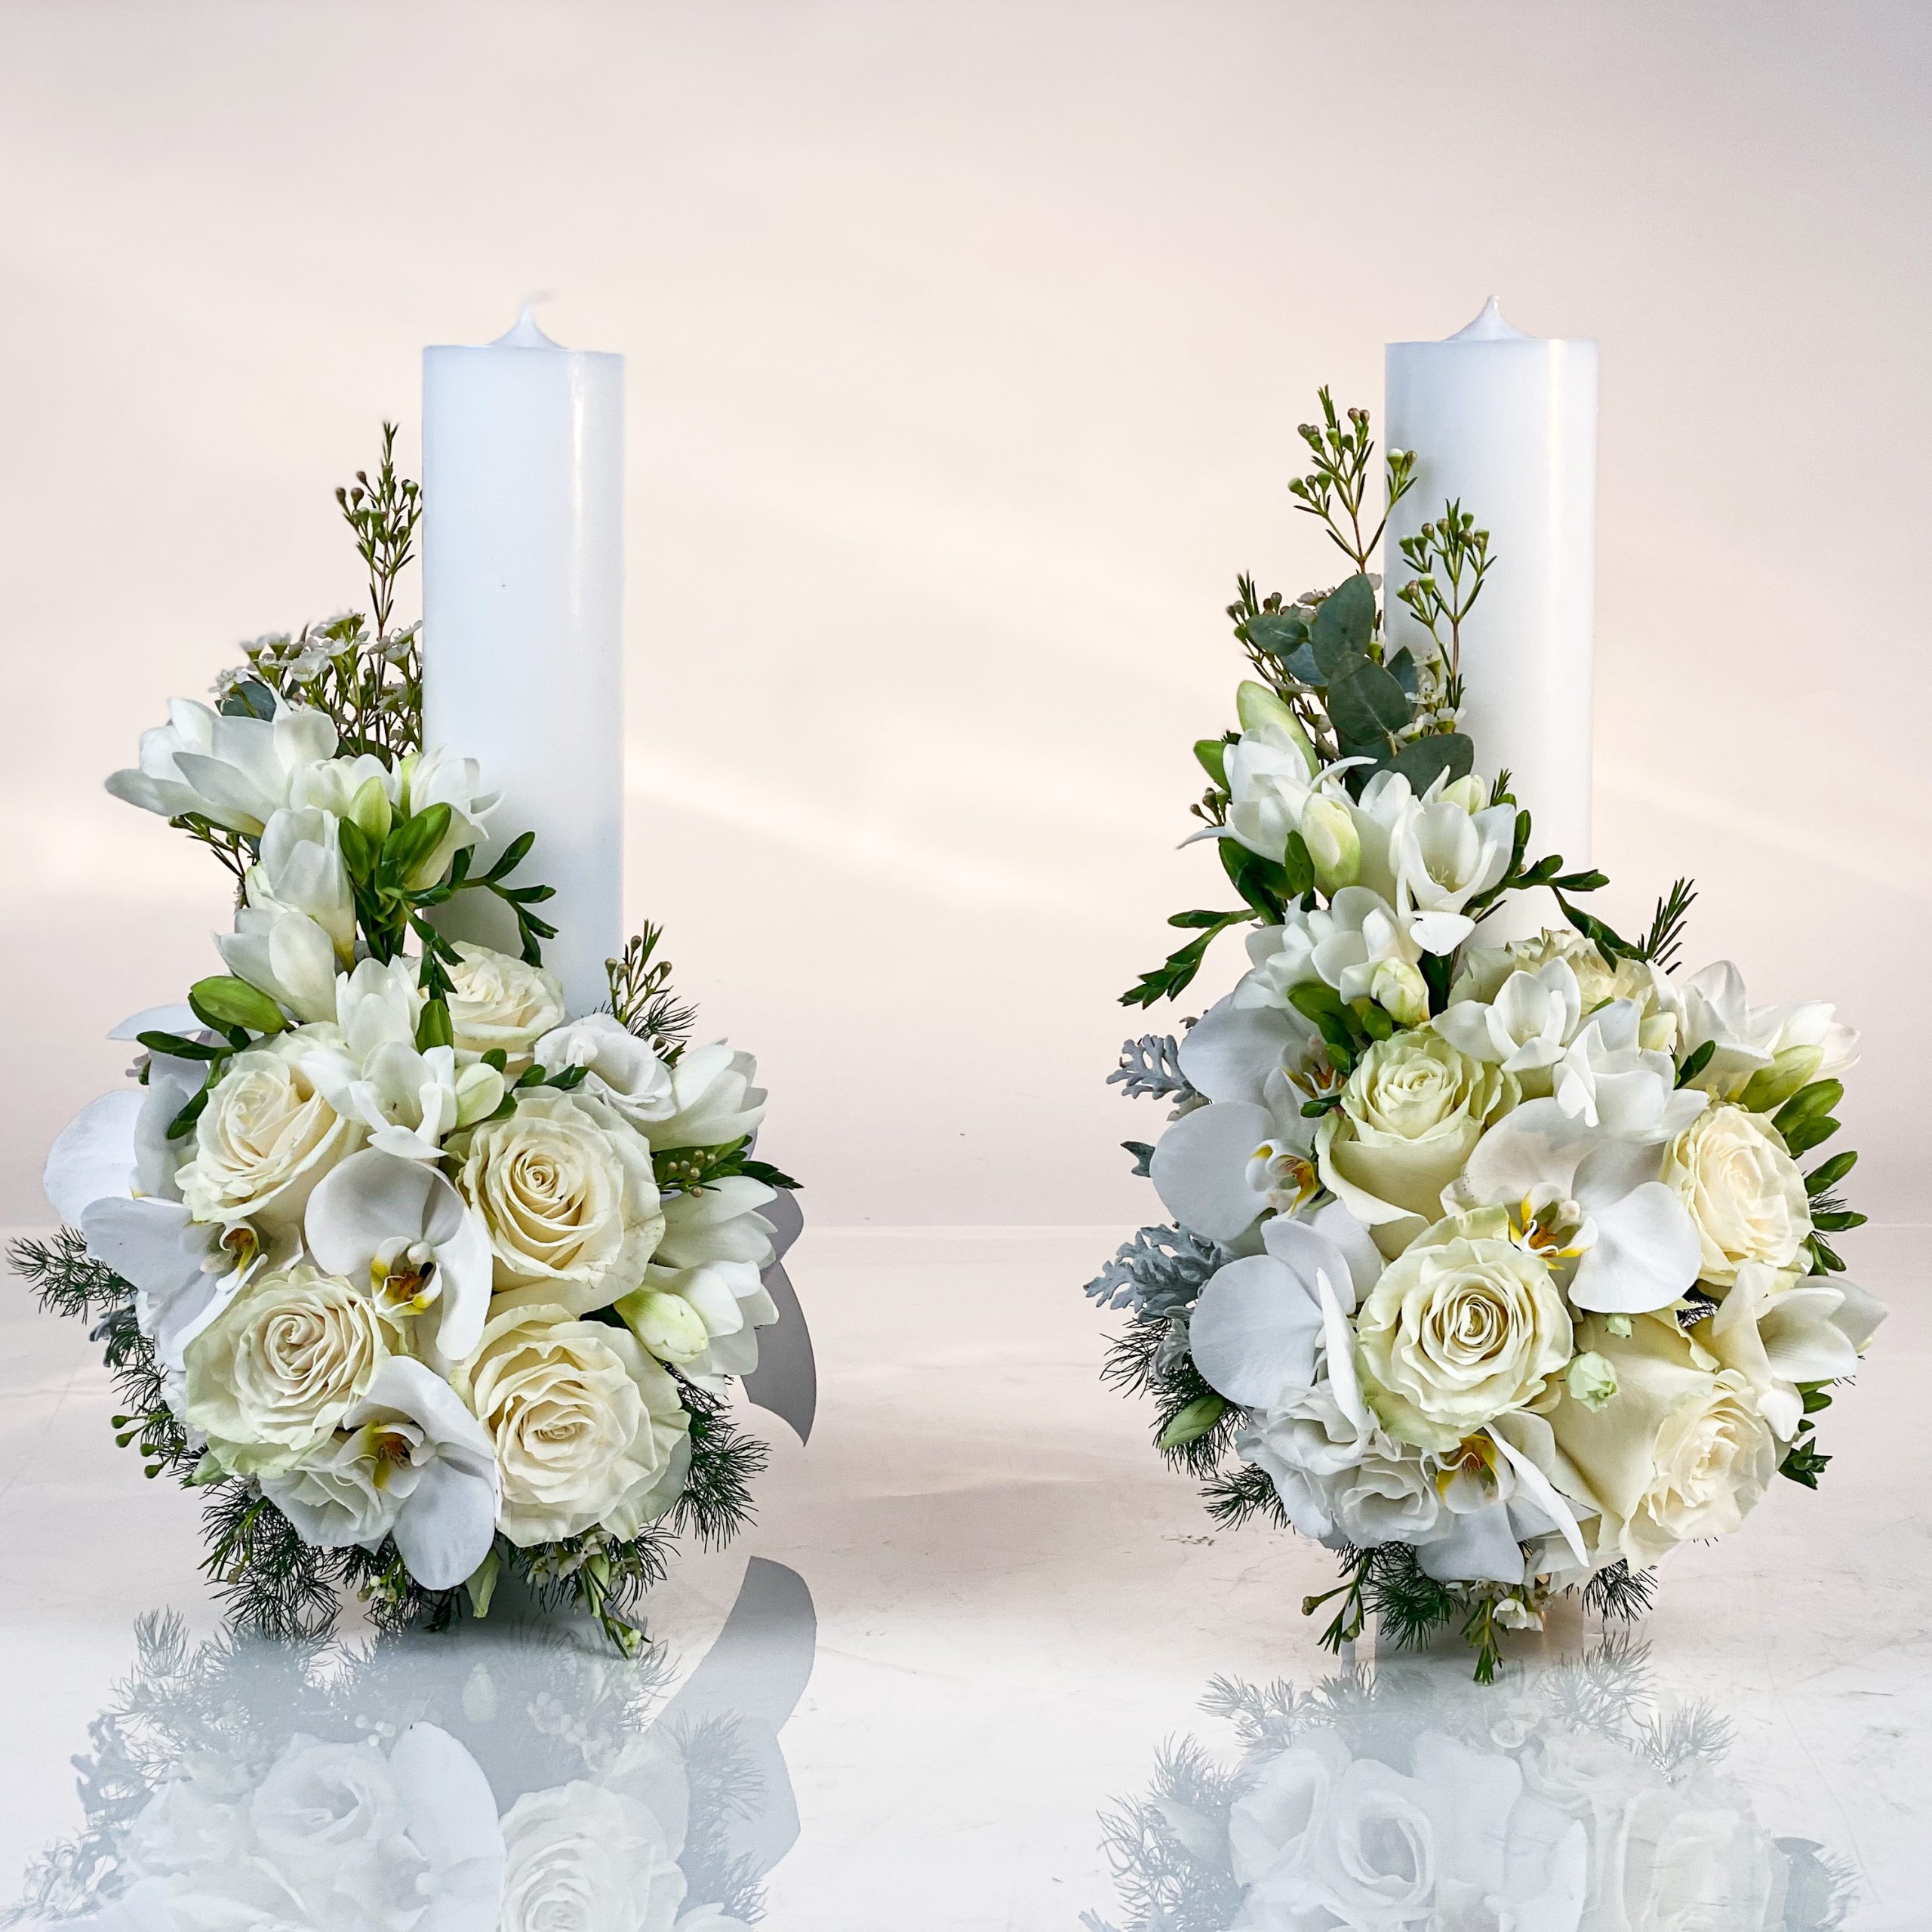 Lumanari de cununie White Wedding cu Phallaenophsis trandafiri si frezii 1 scaled